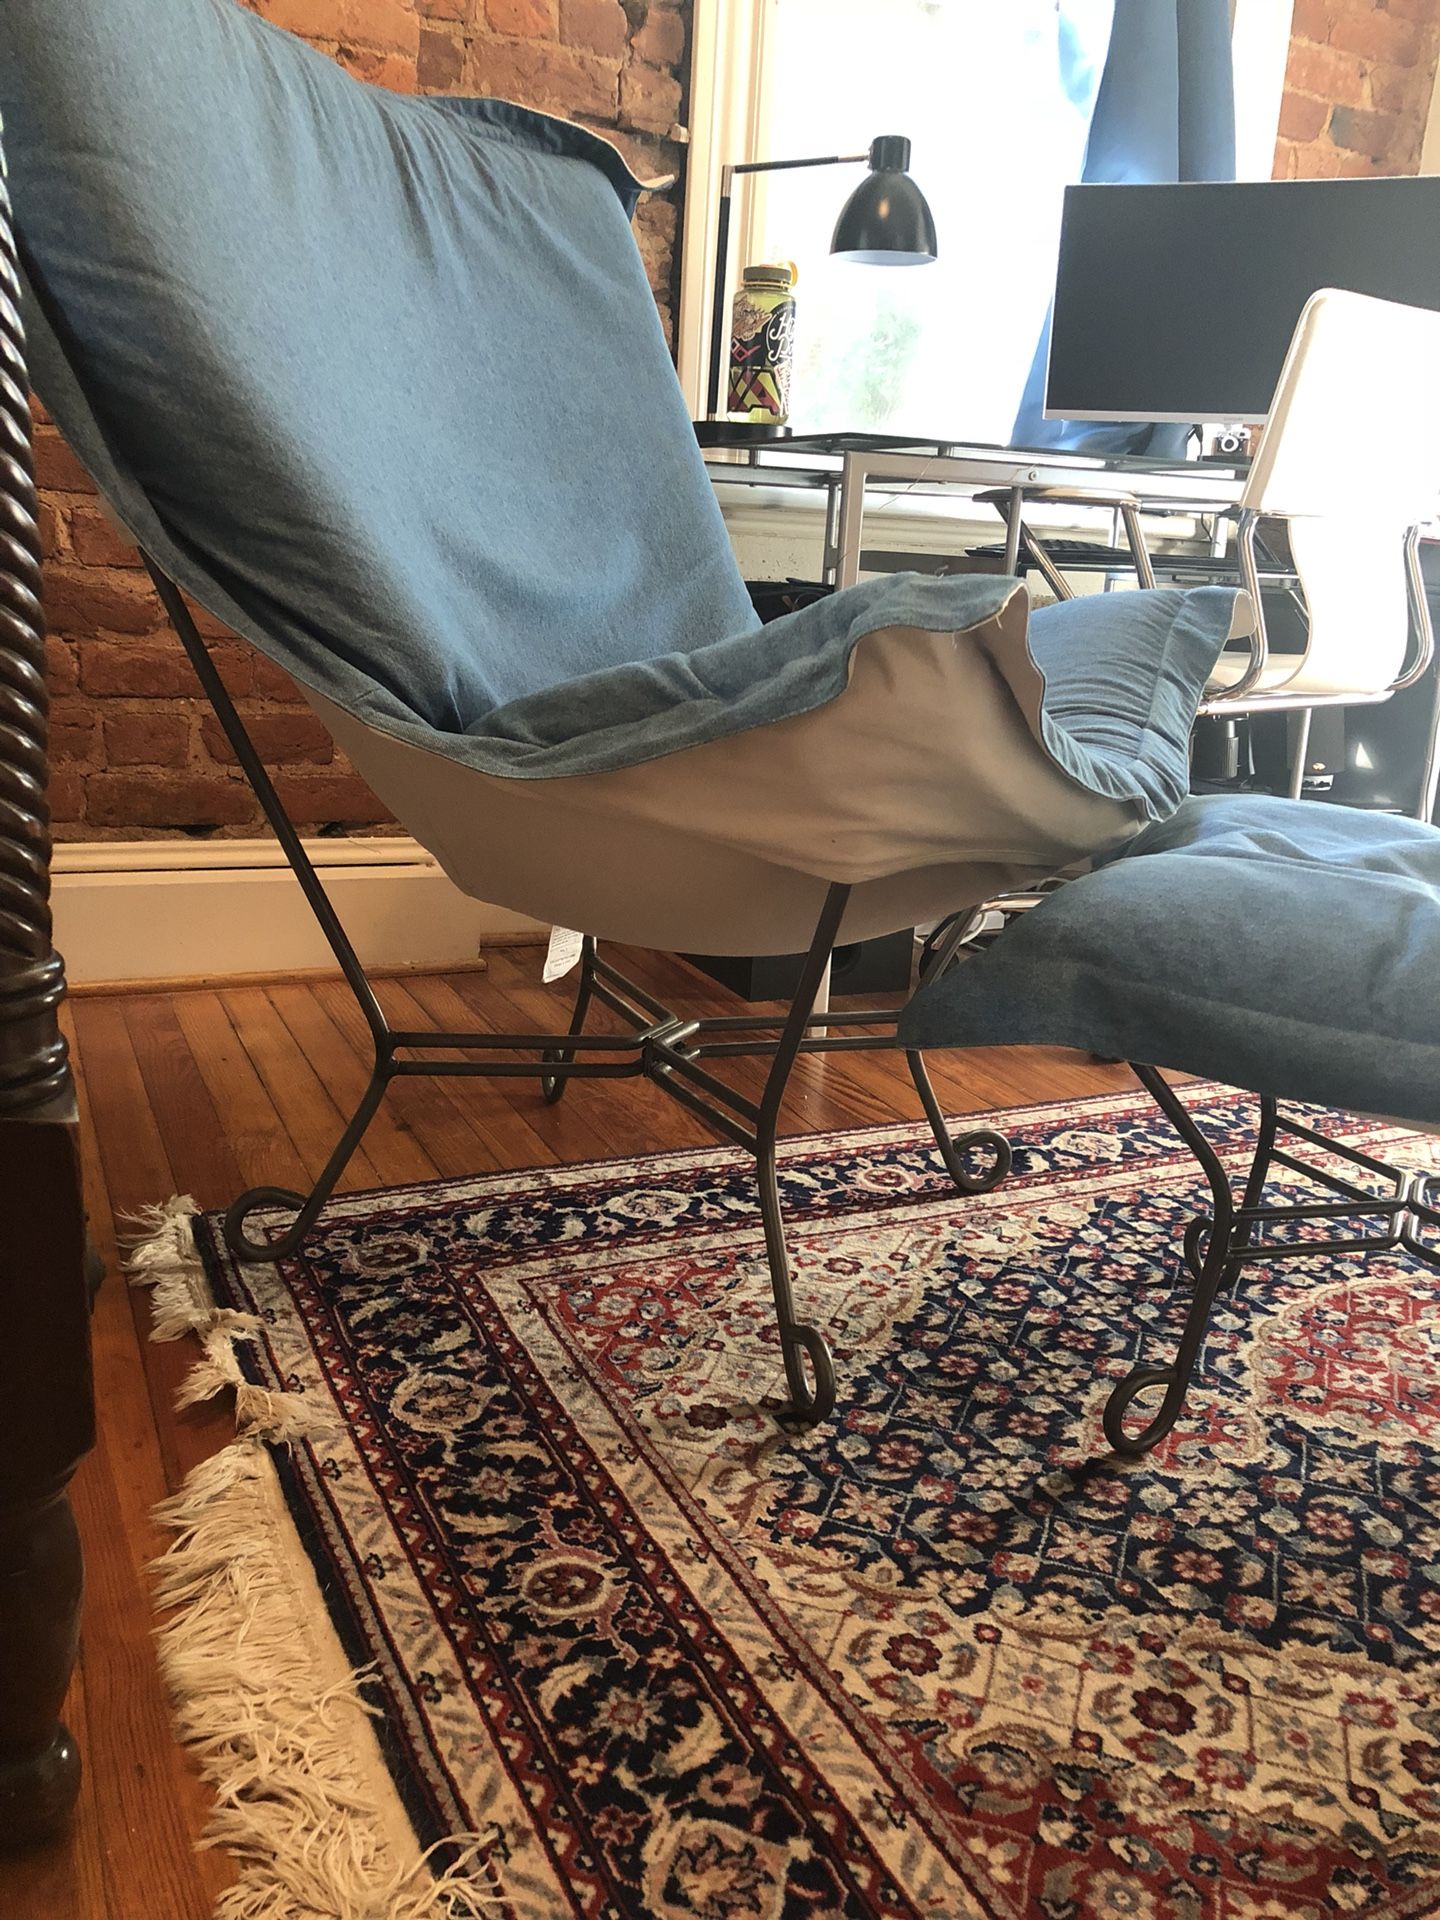 Denim chair with ottoman